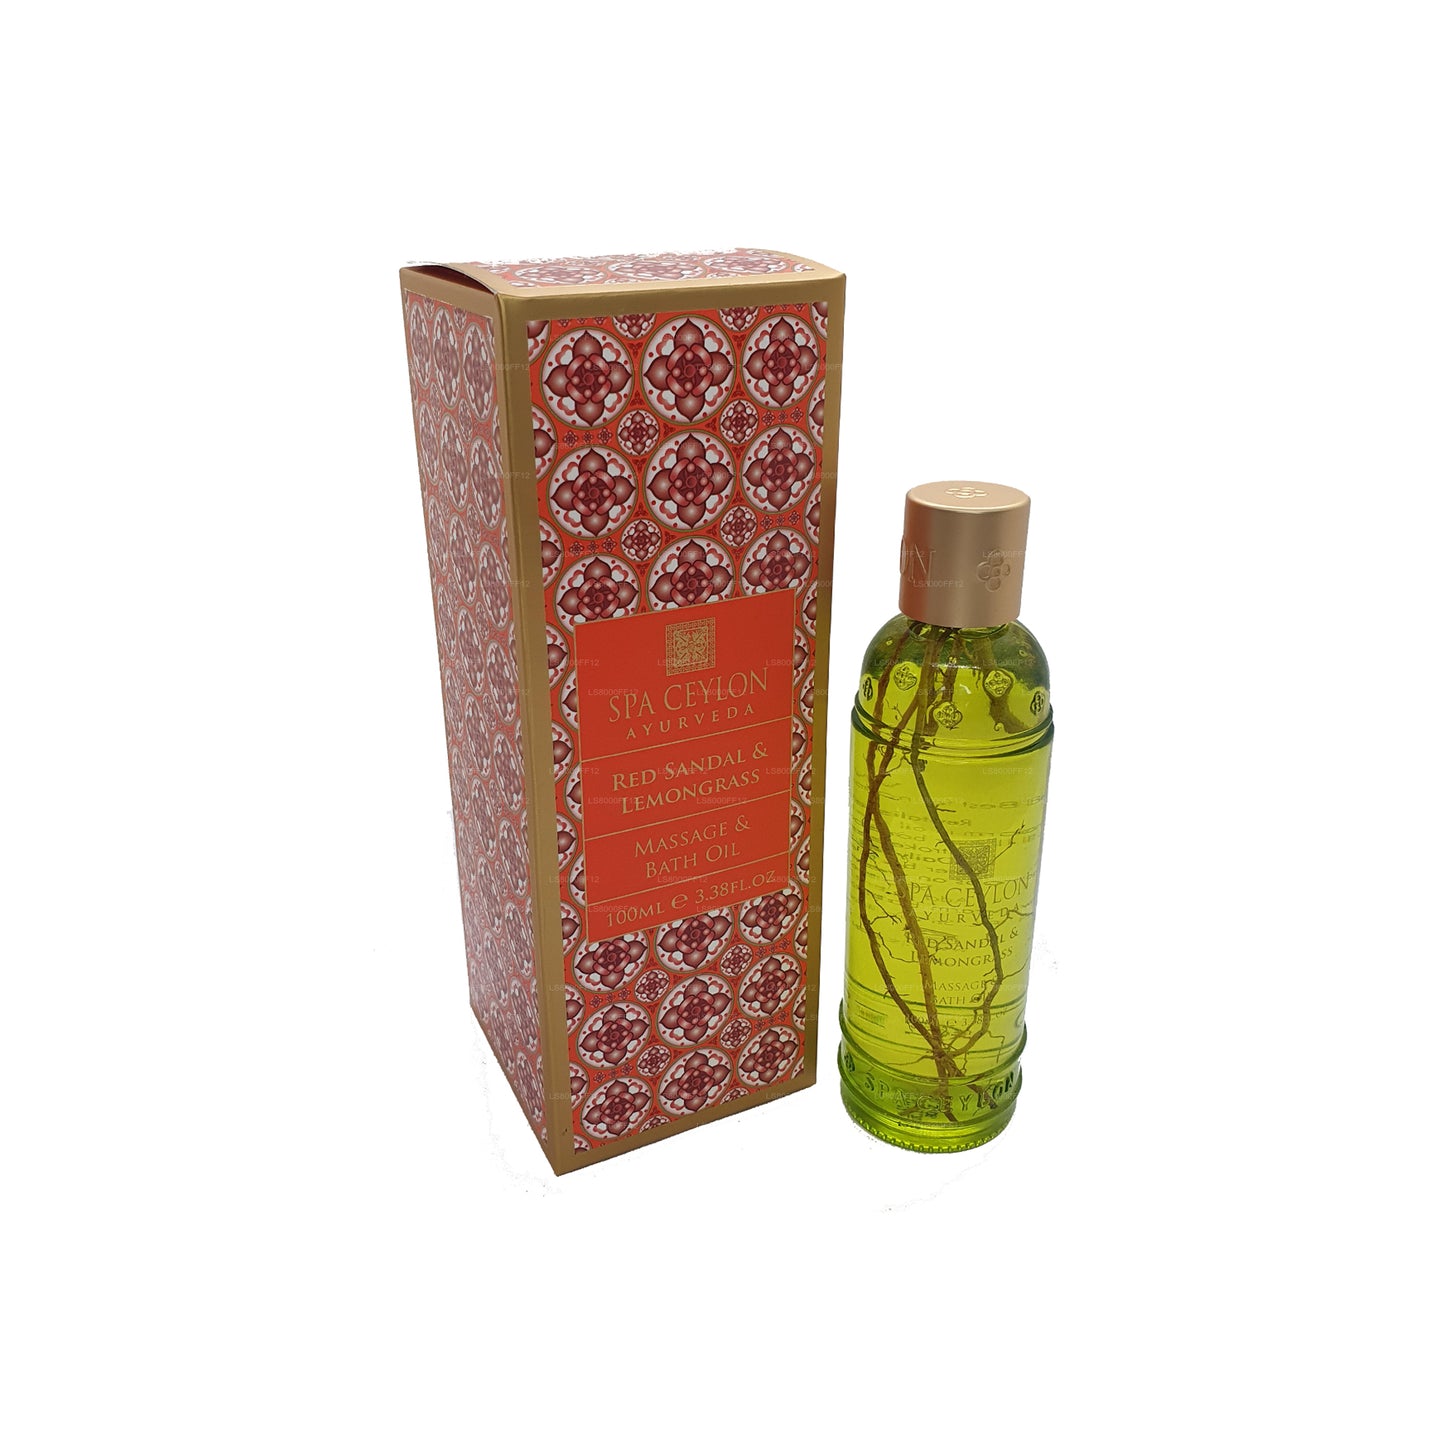 Spa Ceylon Red Sandal & Lemongrass Massage & Bath Oil (100ml)